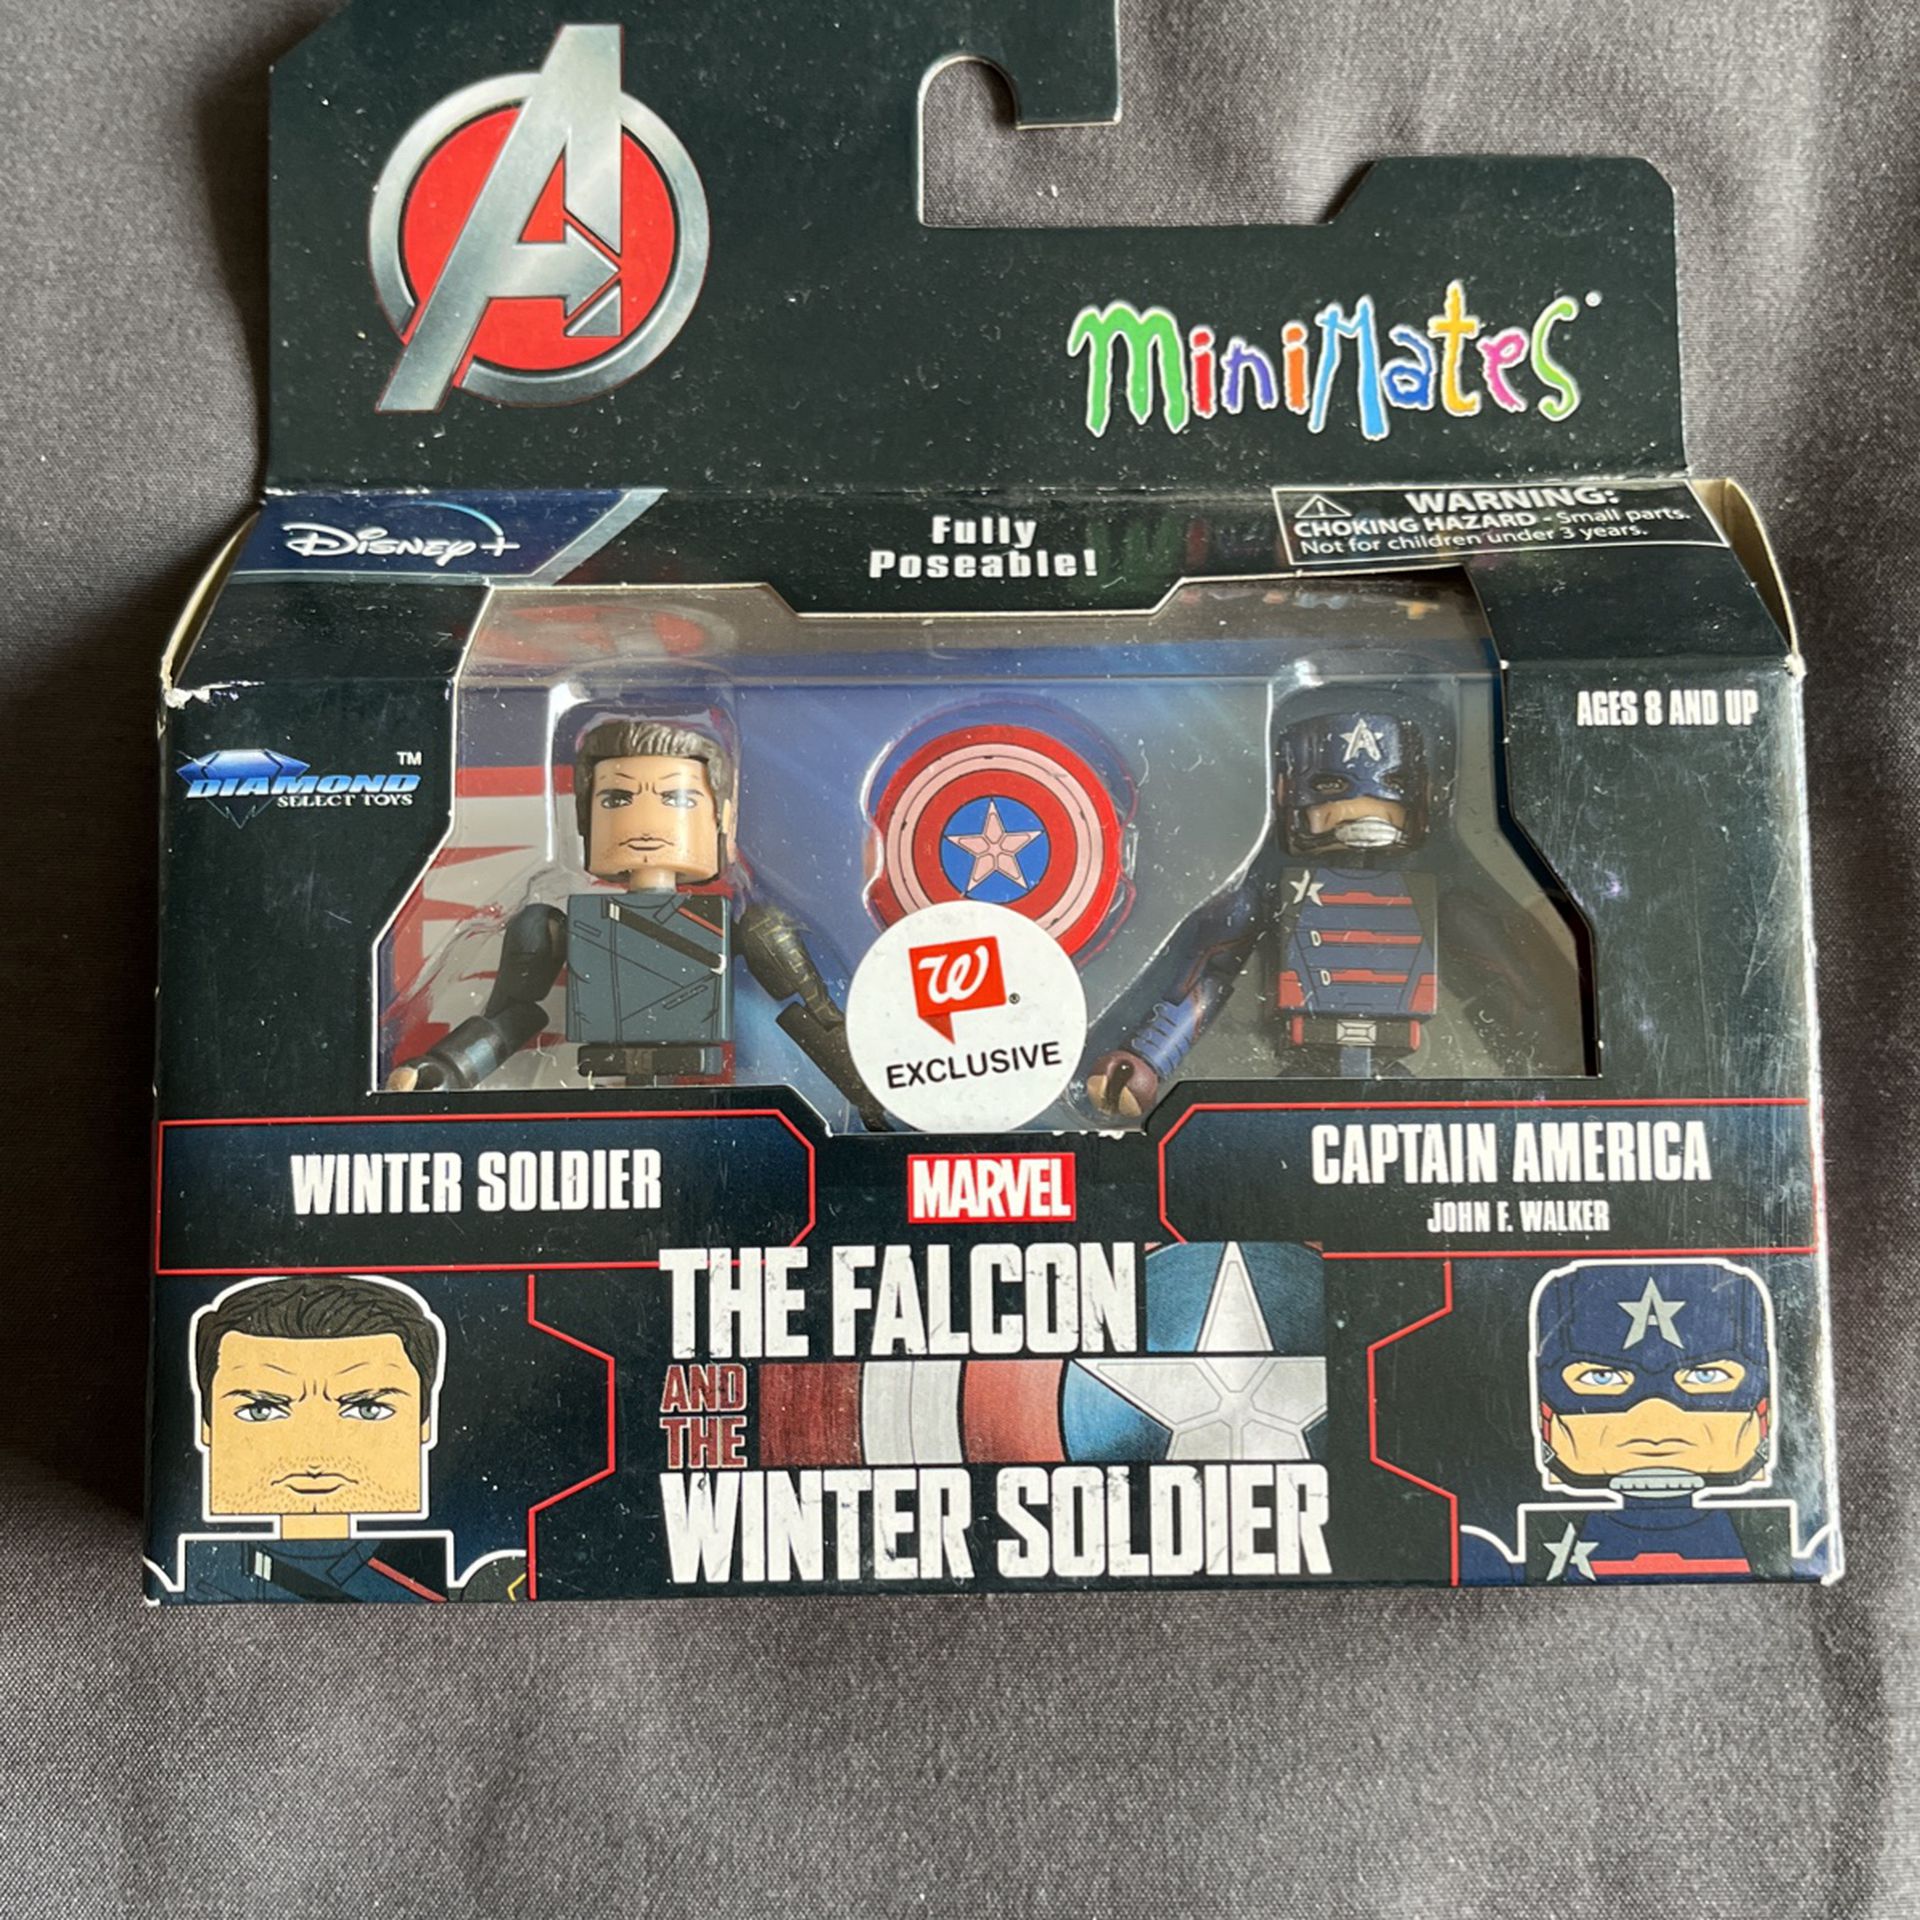 Winter soldier & Captain America